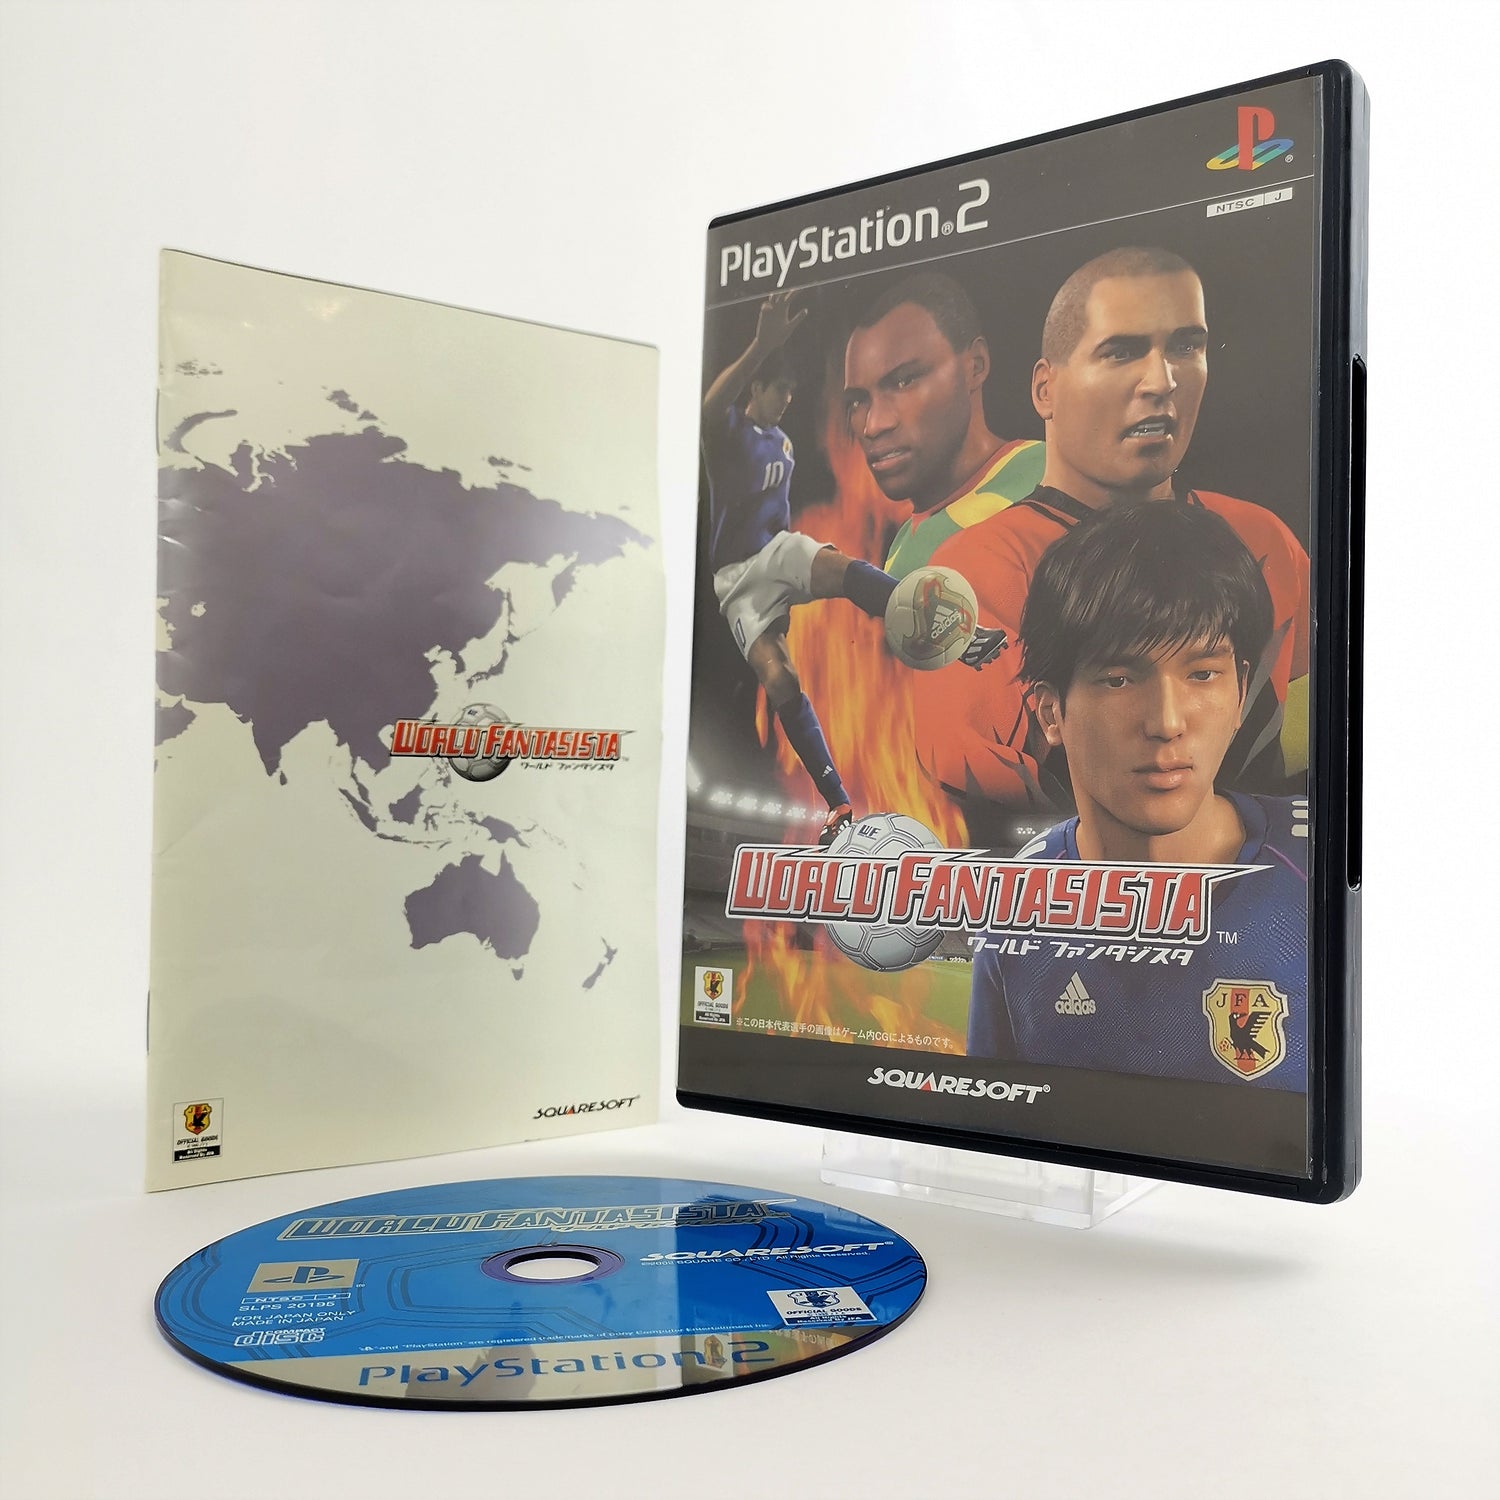 Sony Playstation 2 Spiel : World Fantasista - Fußball | OVP NTSC-J JAPAN